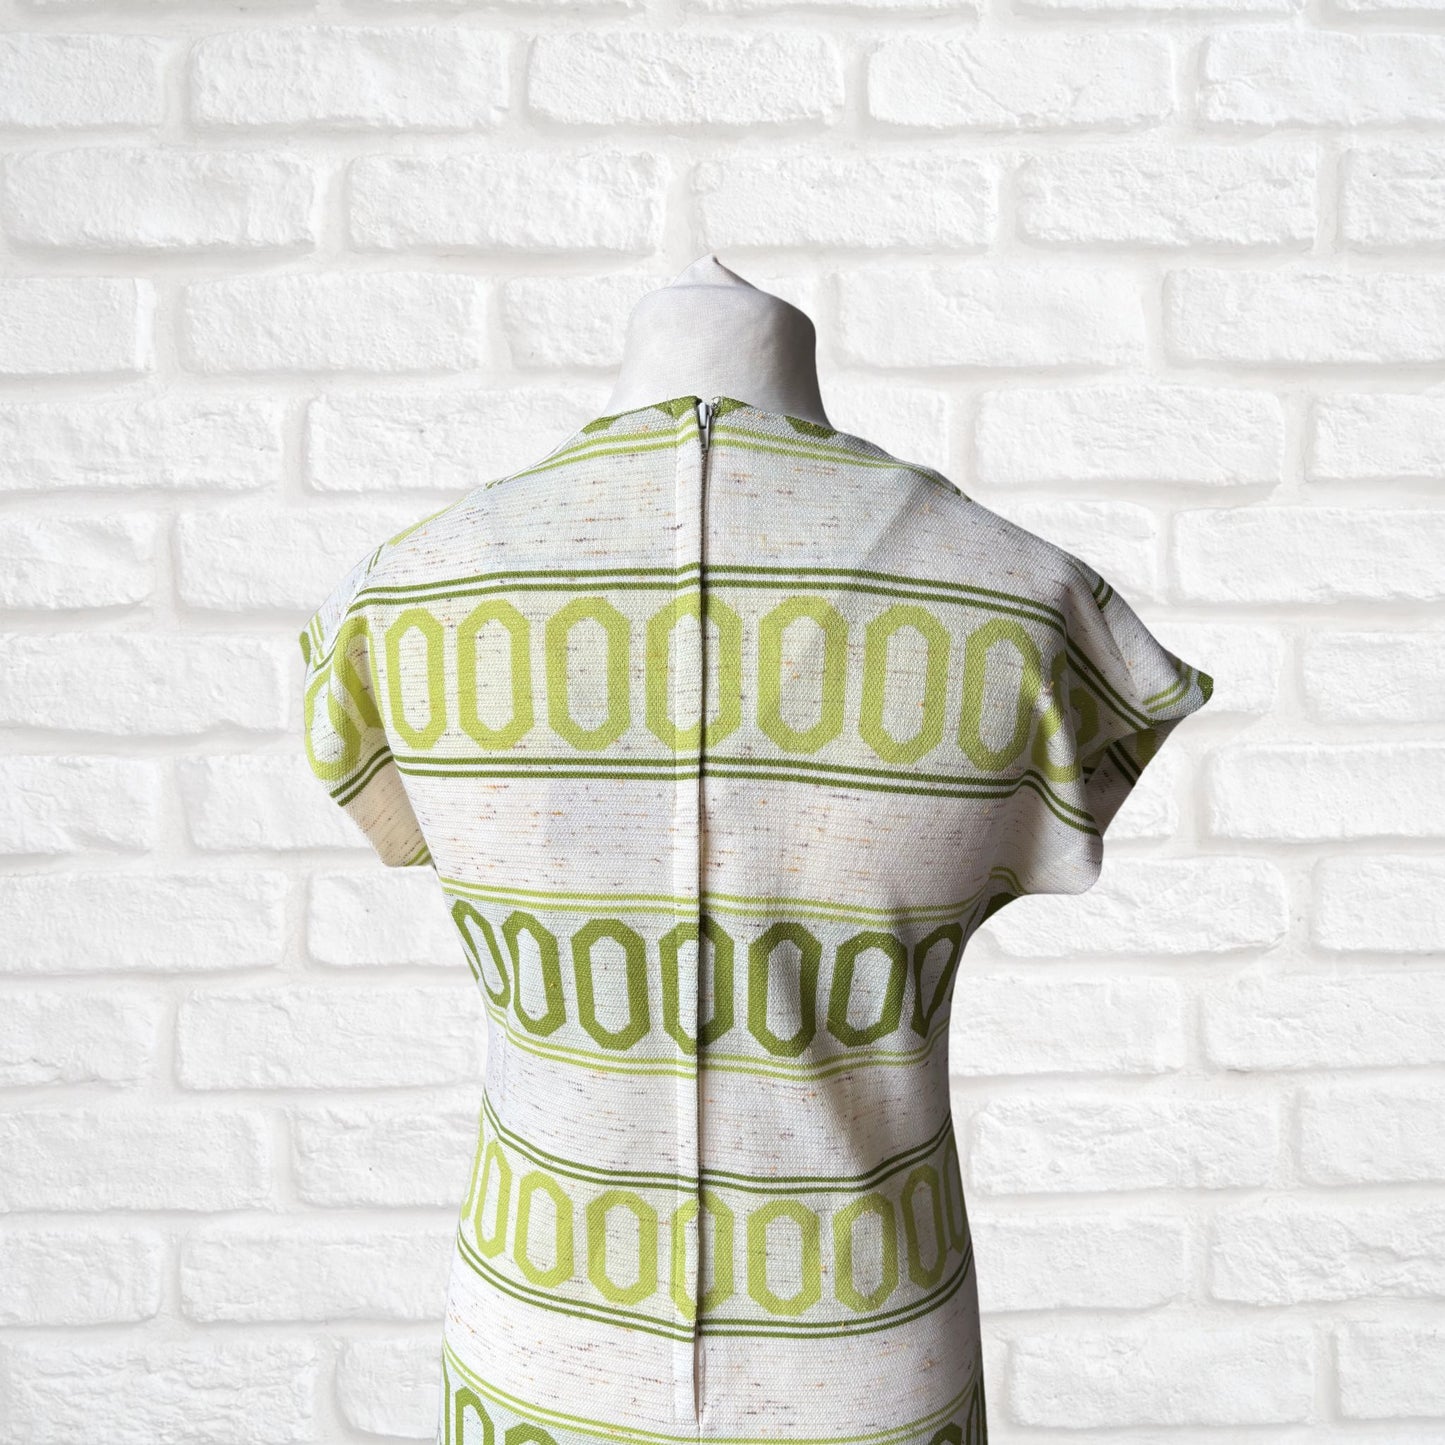 60s Cream & Green Geometric Print Short Sleeved Vintage Shift Dress. Approx UK size 12-14